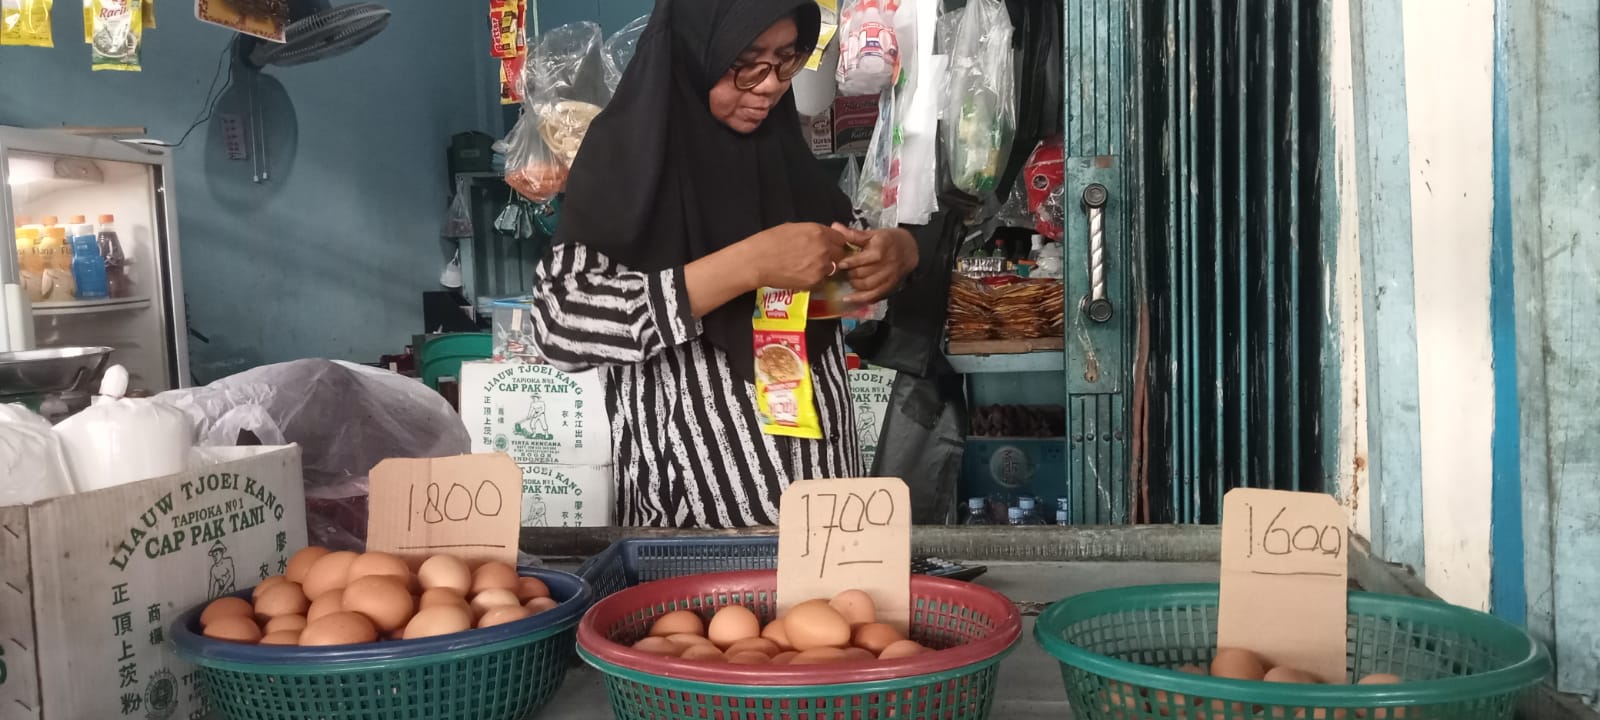 Harga Telur di Kota Jambi Masih Tinggi, Pedagang Ungkap Penyebabnya